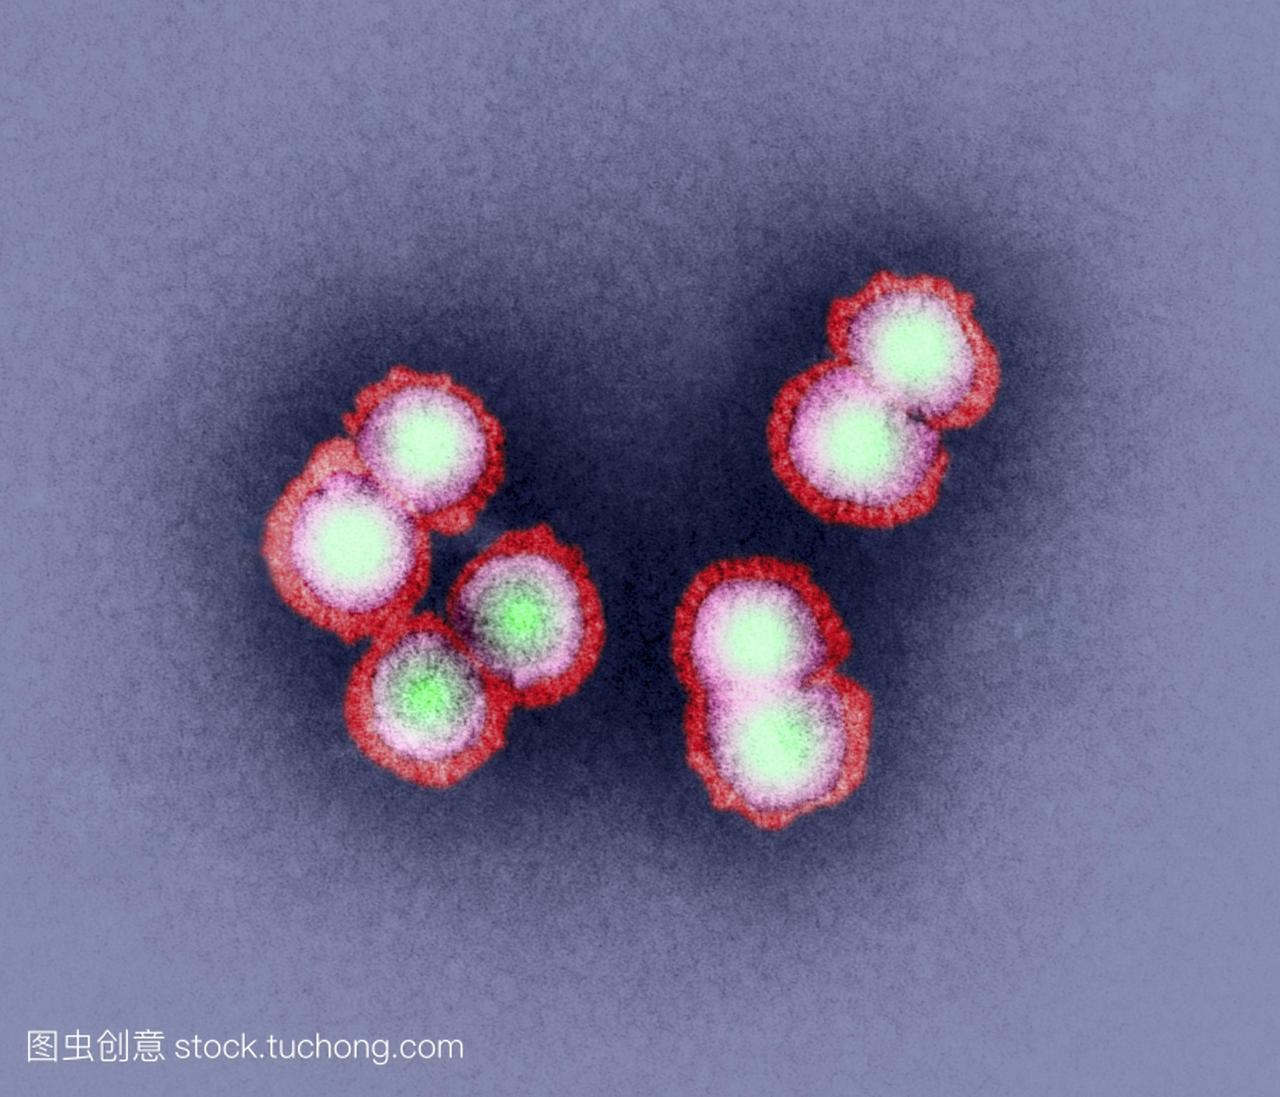 h5n1禽流感病毒粒子,彩色透射电子显微图tem。